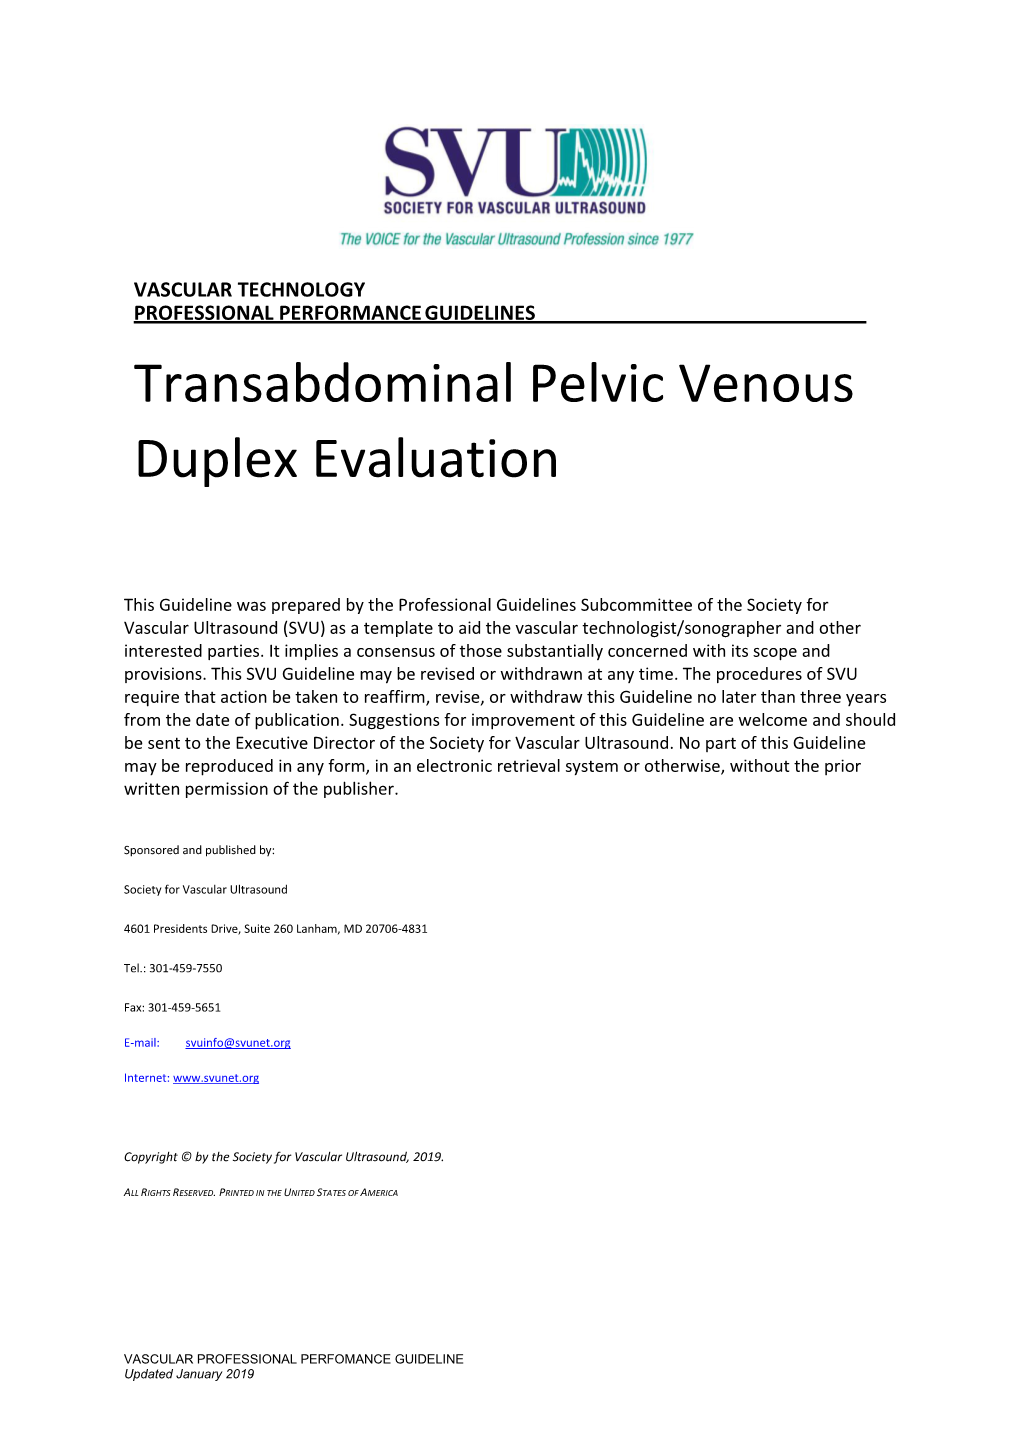 Transabdominal Pelvic Venous Duplex Evaluation